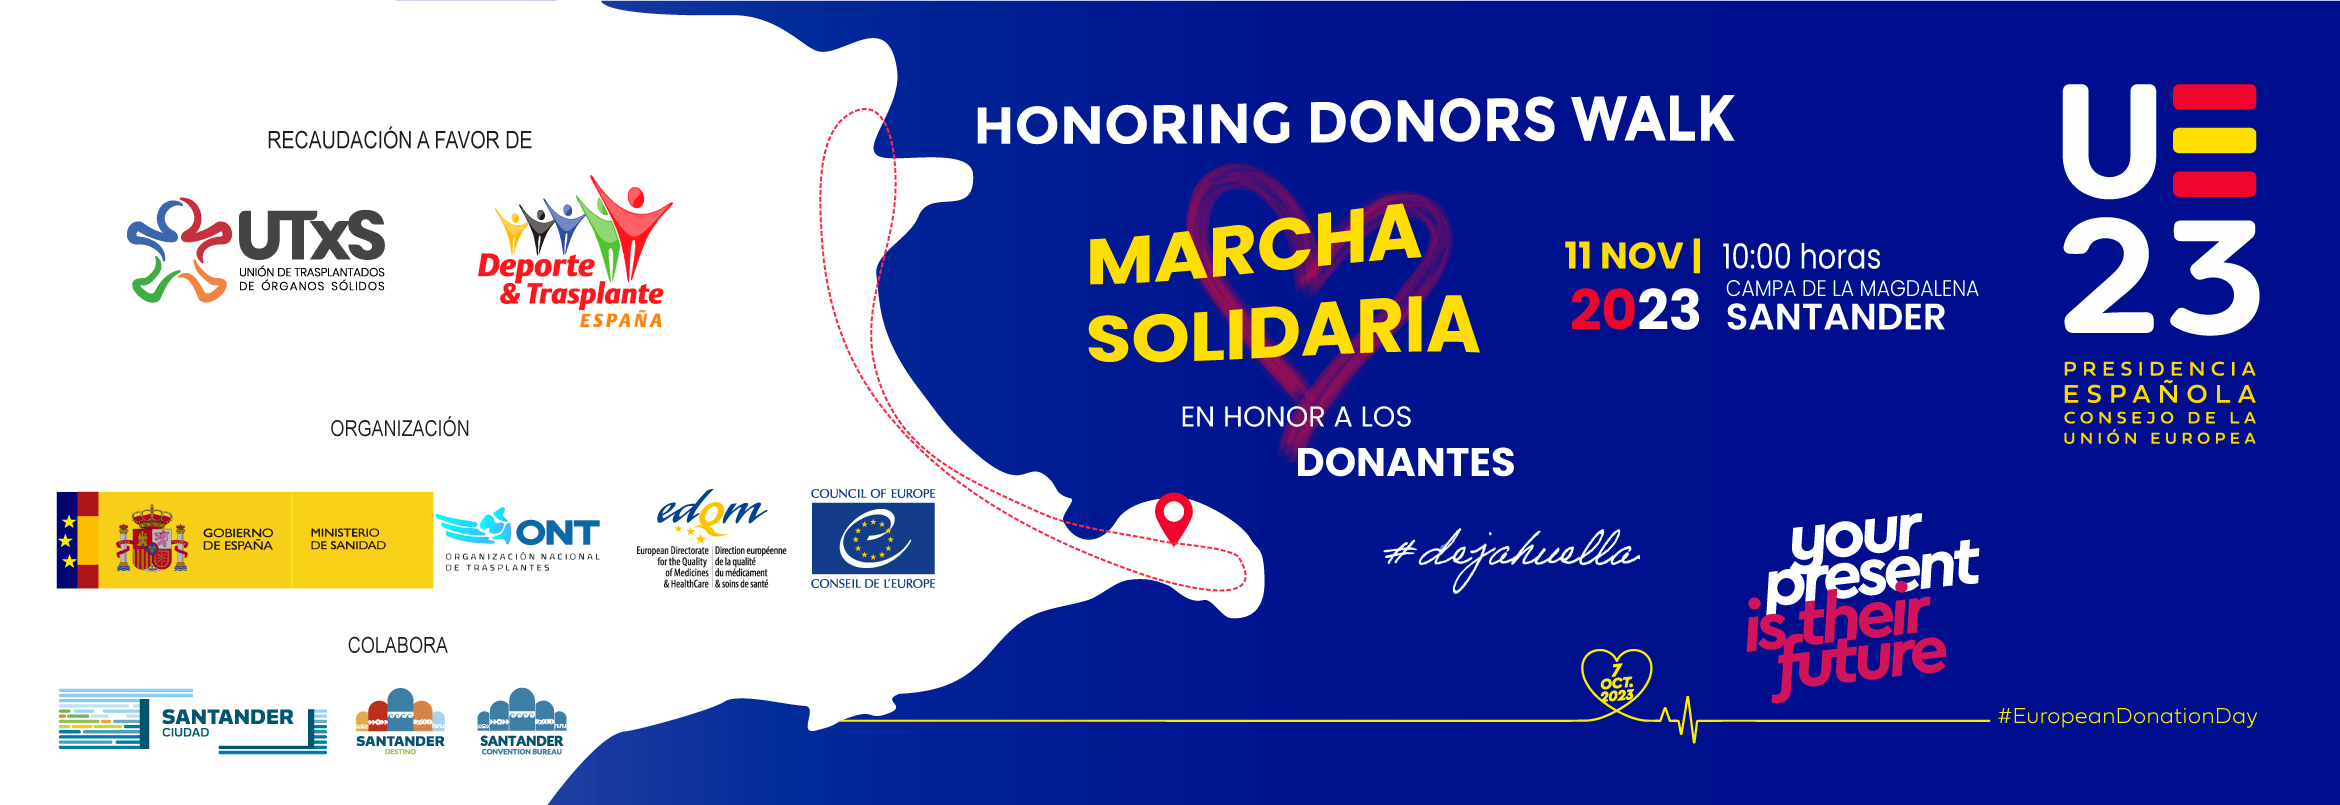 Marcha Popular solidaria en Honor a los Donantes - Honoring Donors Walk Santander 2023